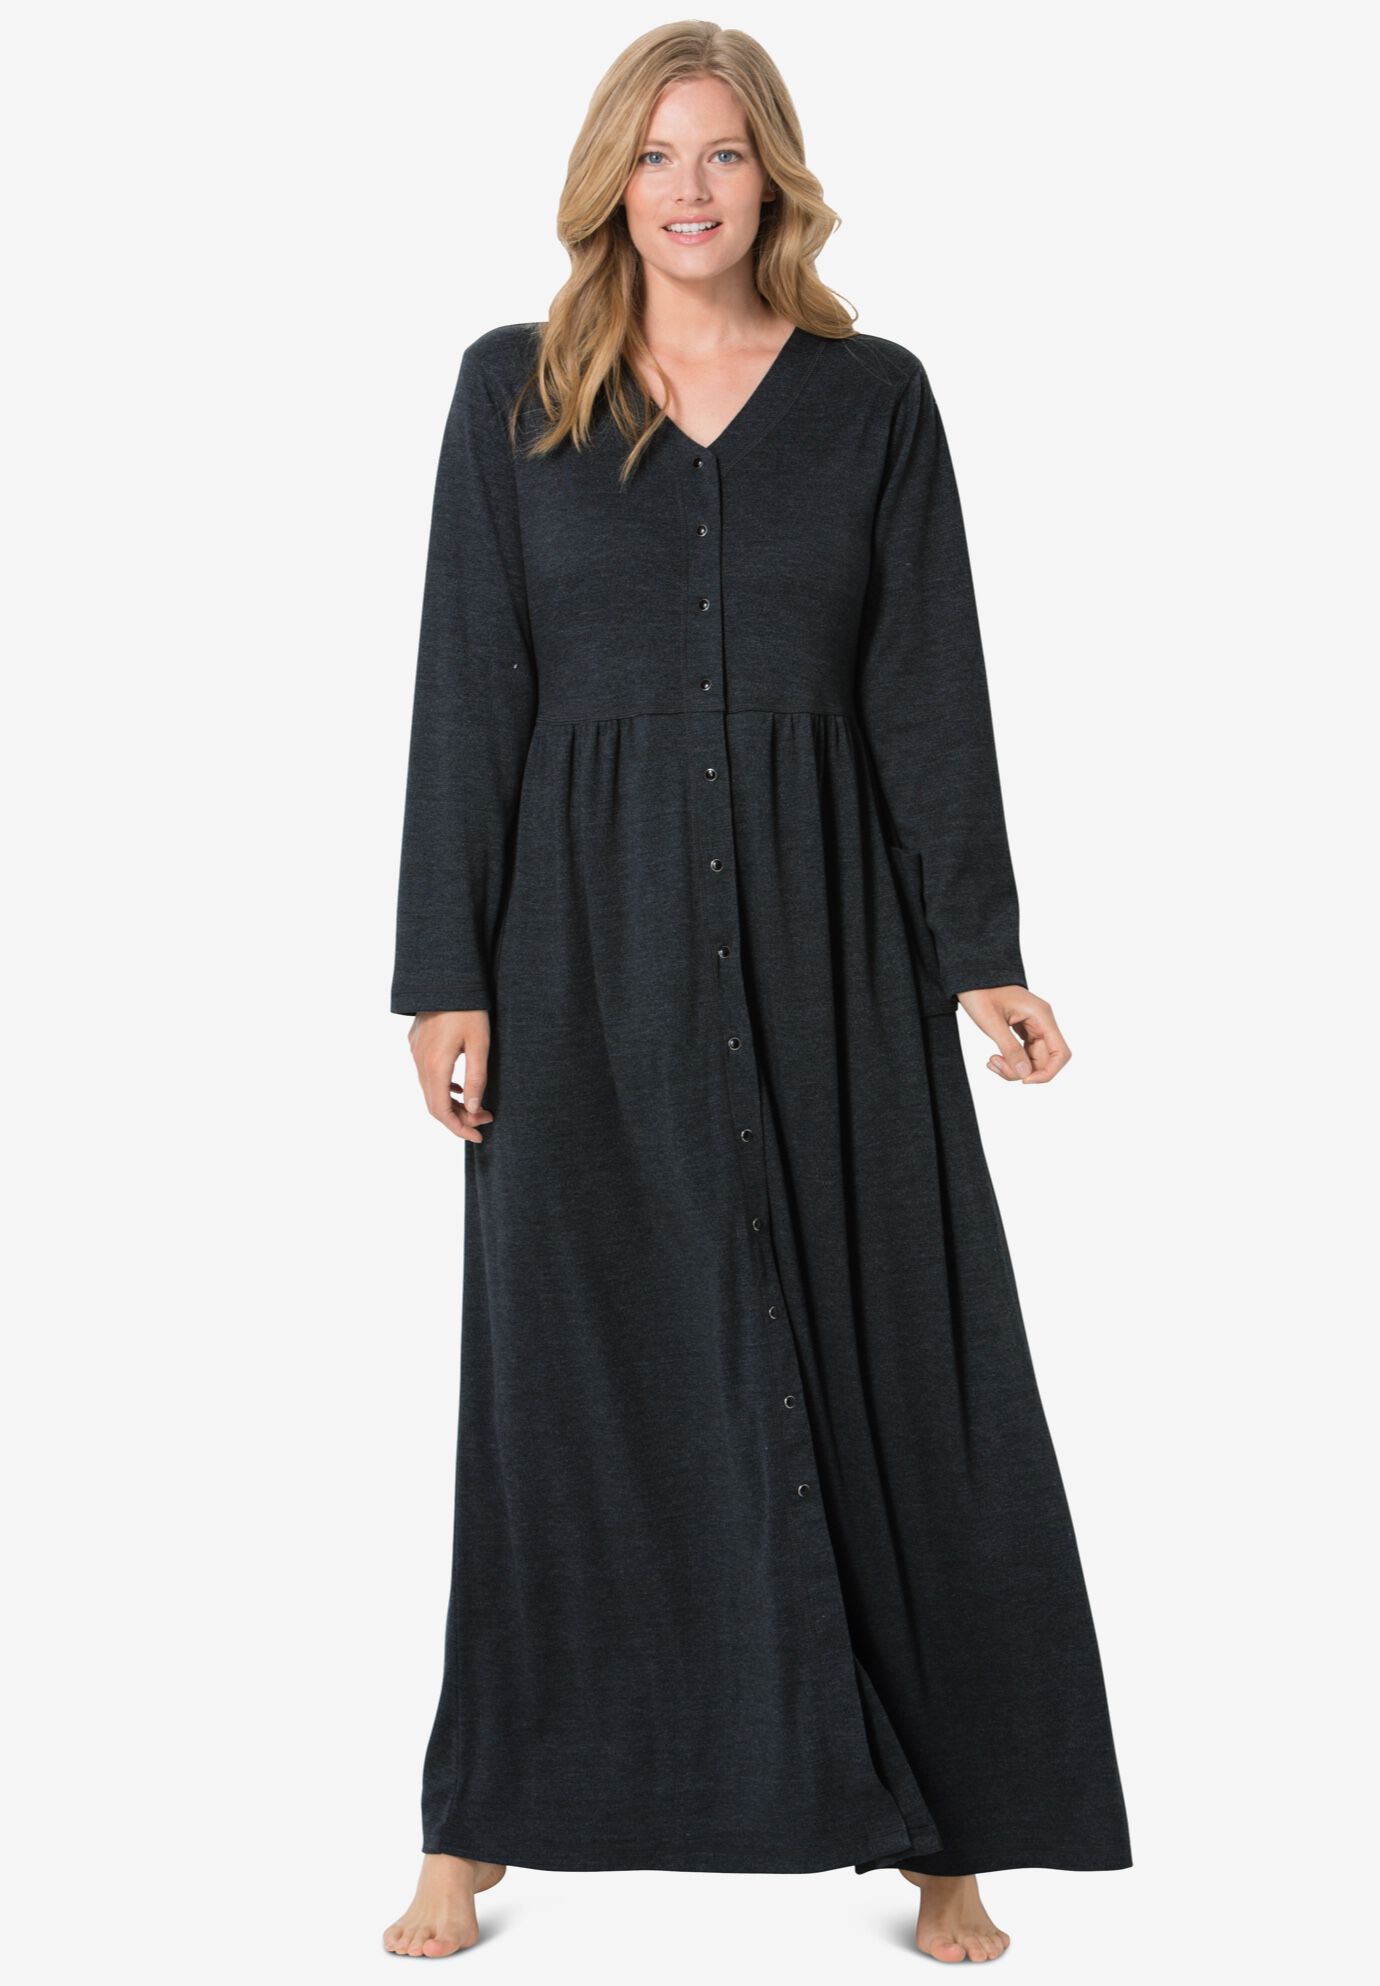 Heather Grey Gray Womens Plus Size Hooded Fleece Robe Dreams & Co 3X 